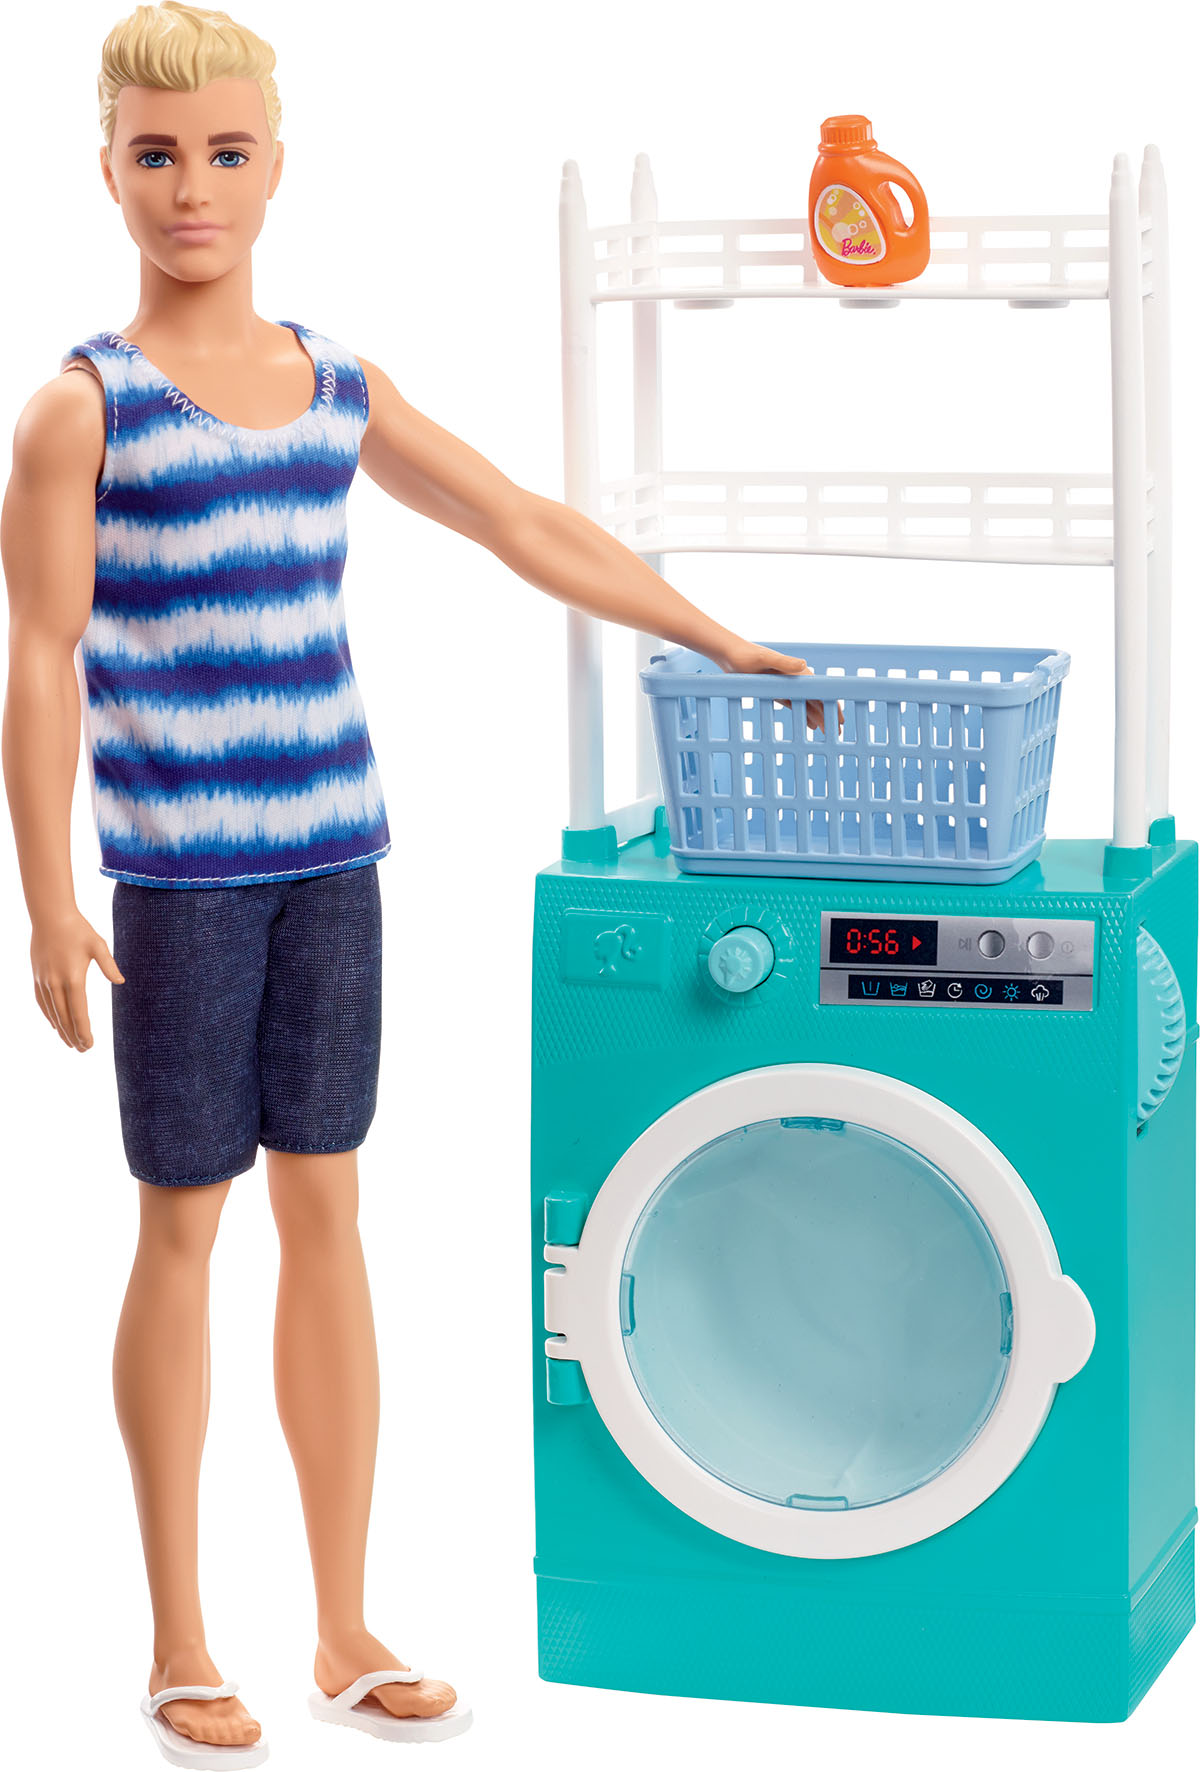 Ken e la sua lavatrice